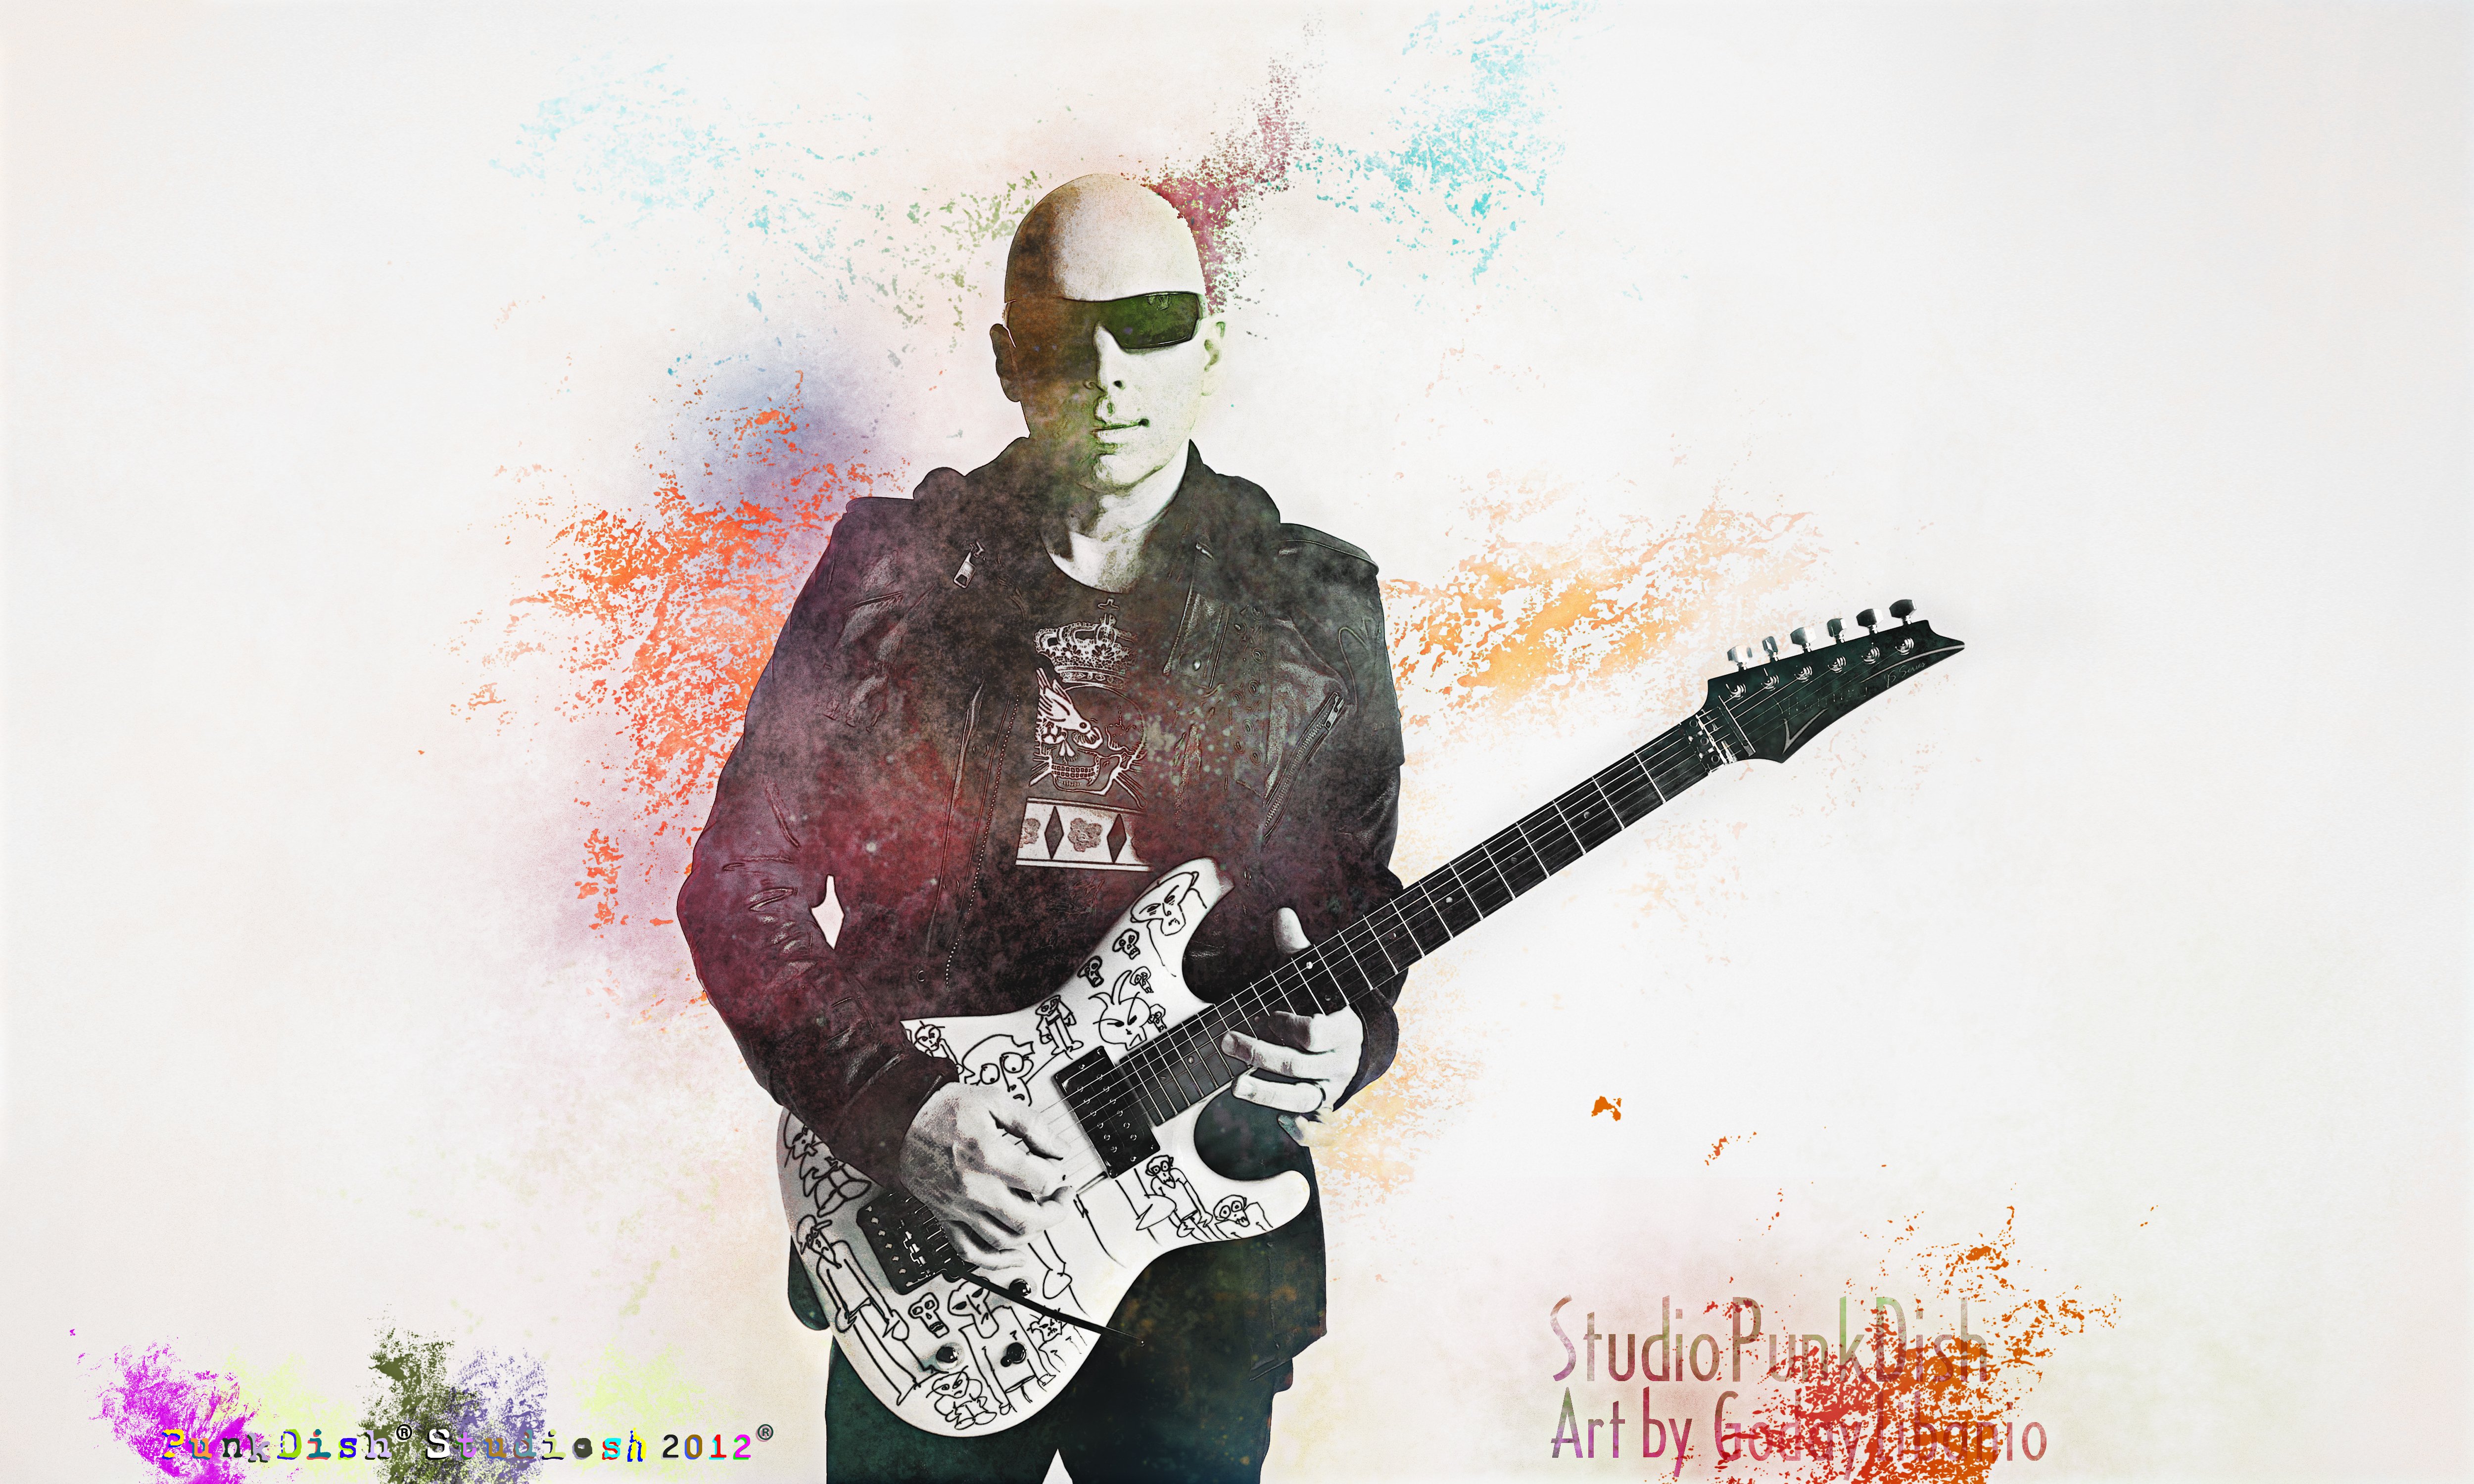 joe, Satriani, Instrumental, Rock, Hard, Heavy, Metal, Guitar, Concert Wallpaper